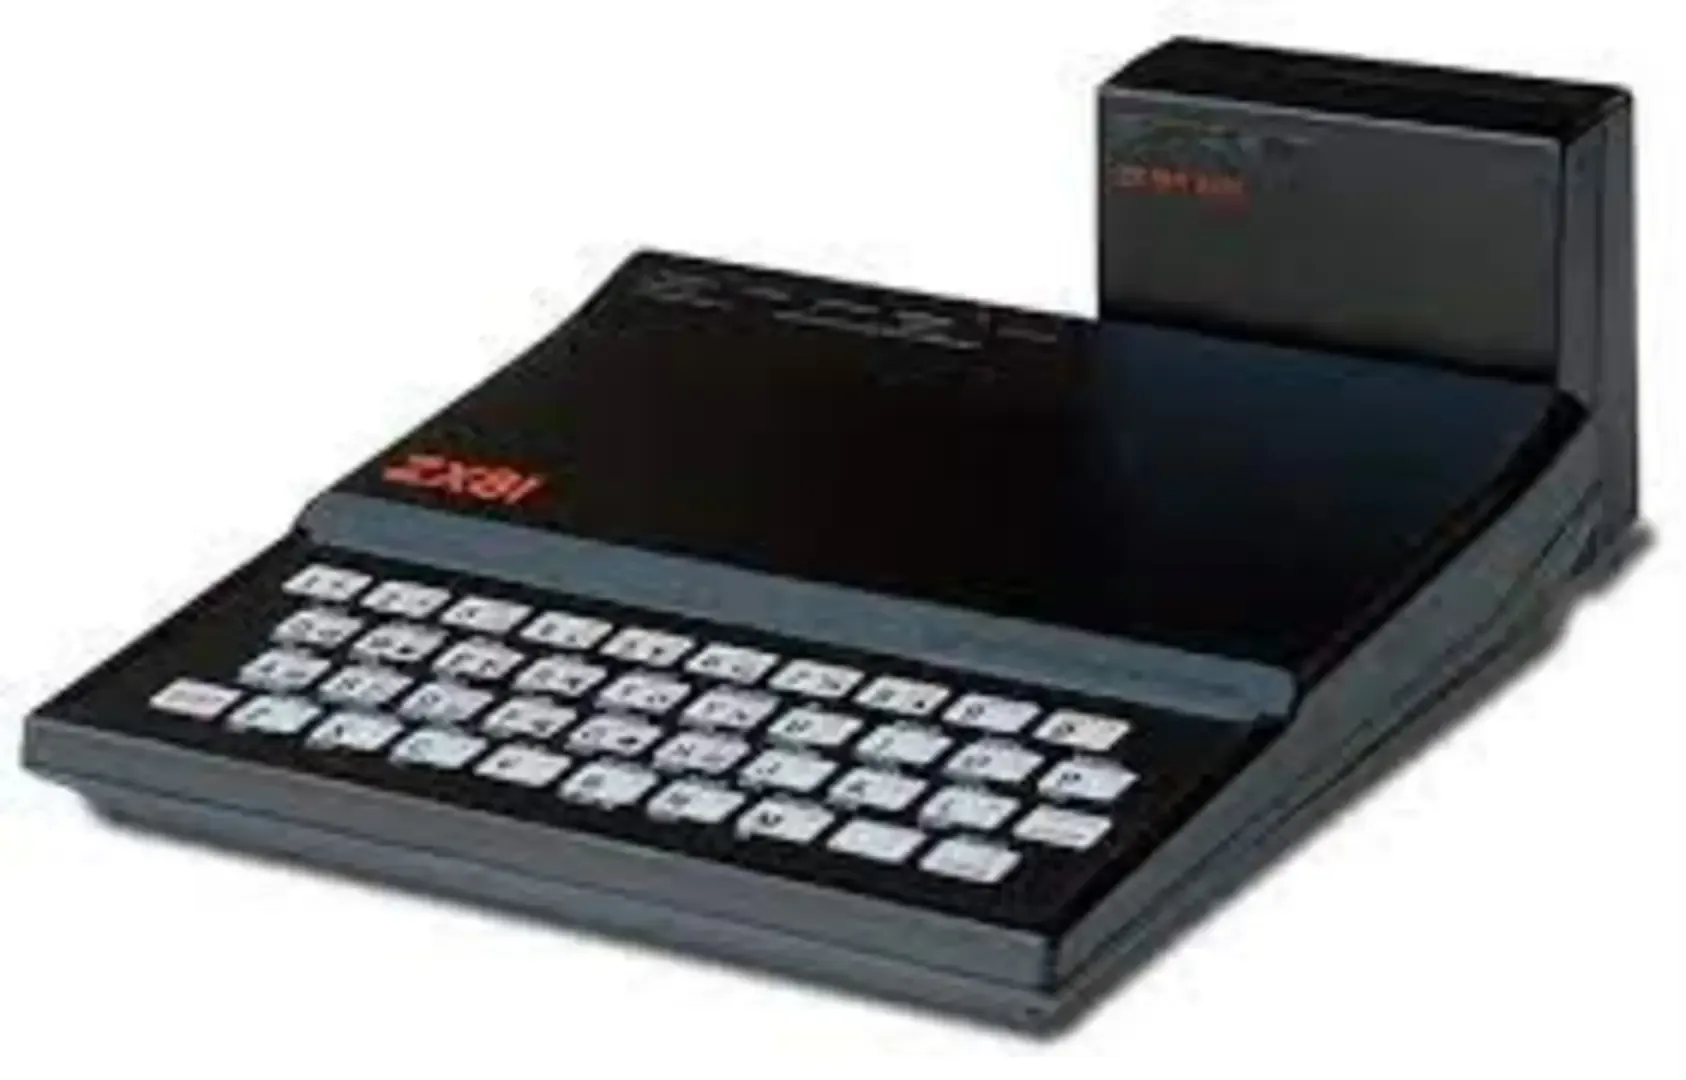 Sinclair ZX81 - Initial version